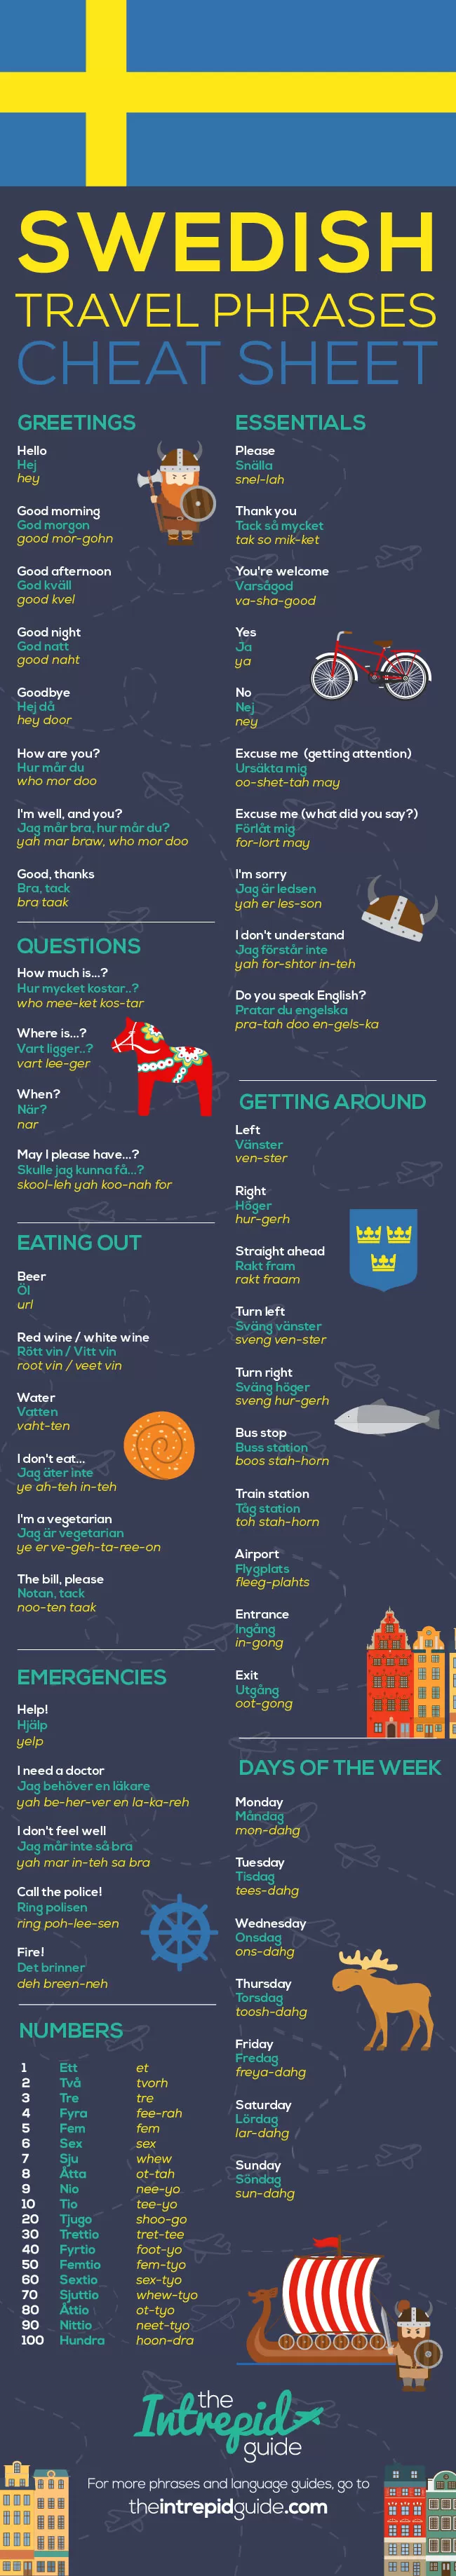 Basic Swedish Phrases for travellers